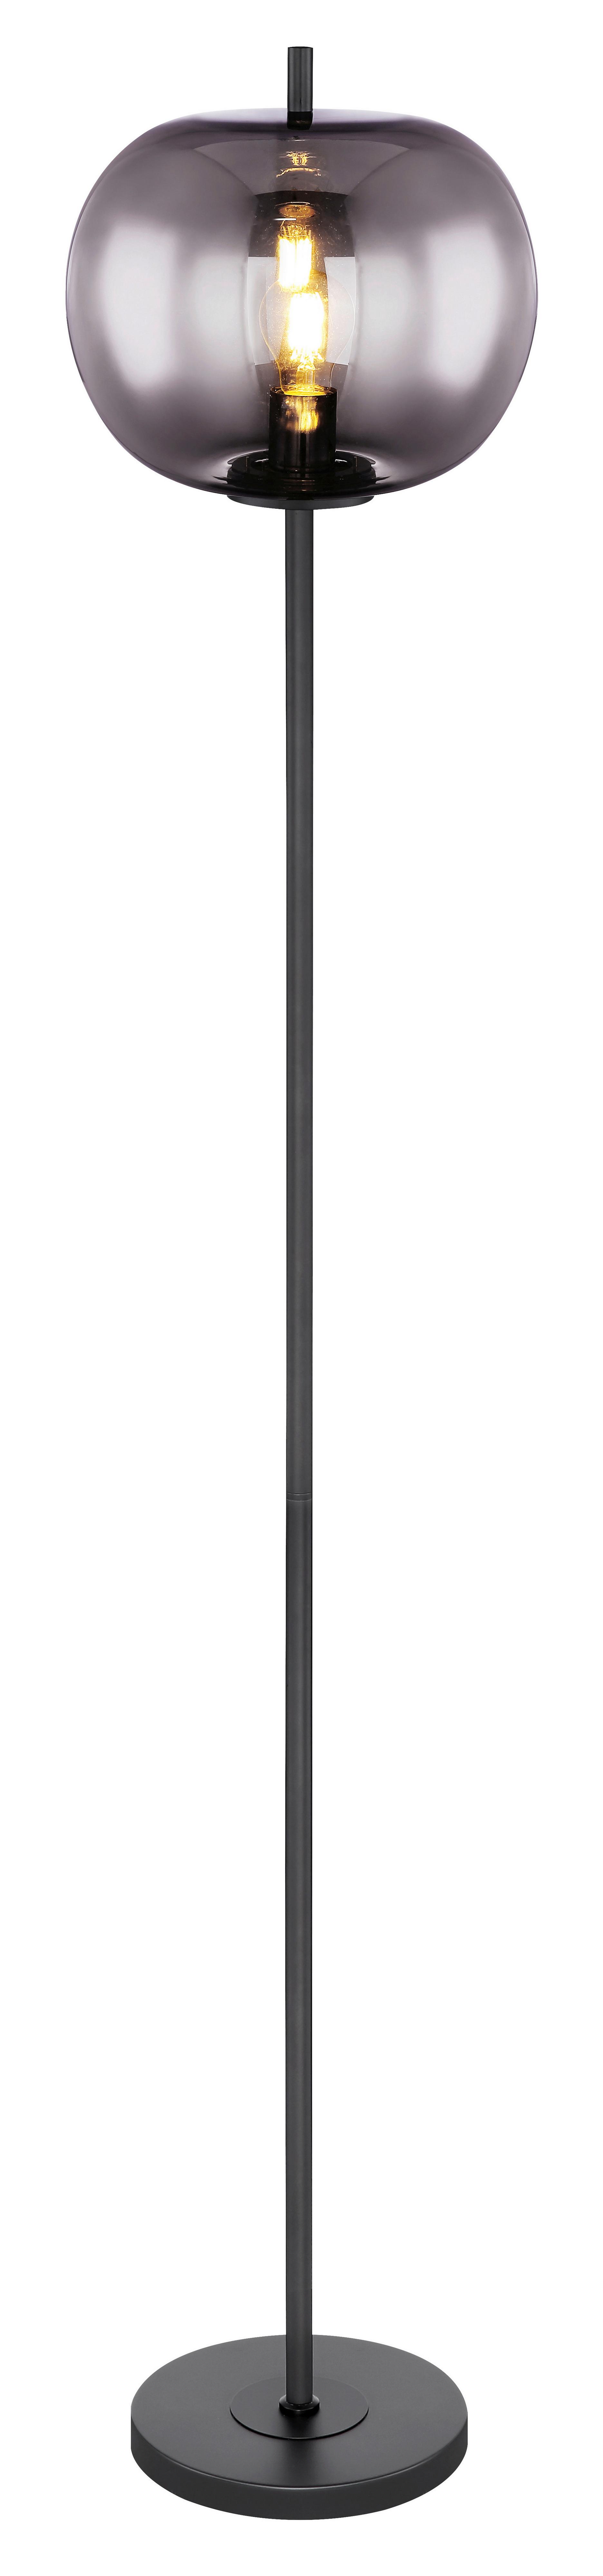 Stehleuchte Blacky in Grau max. 60 Watt - Schwarz/Grau, MODERN, Glas/Metall (30/160cm)